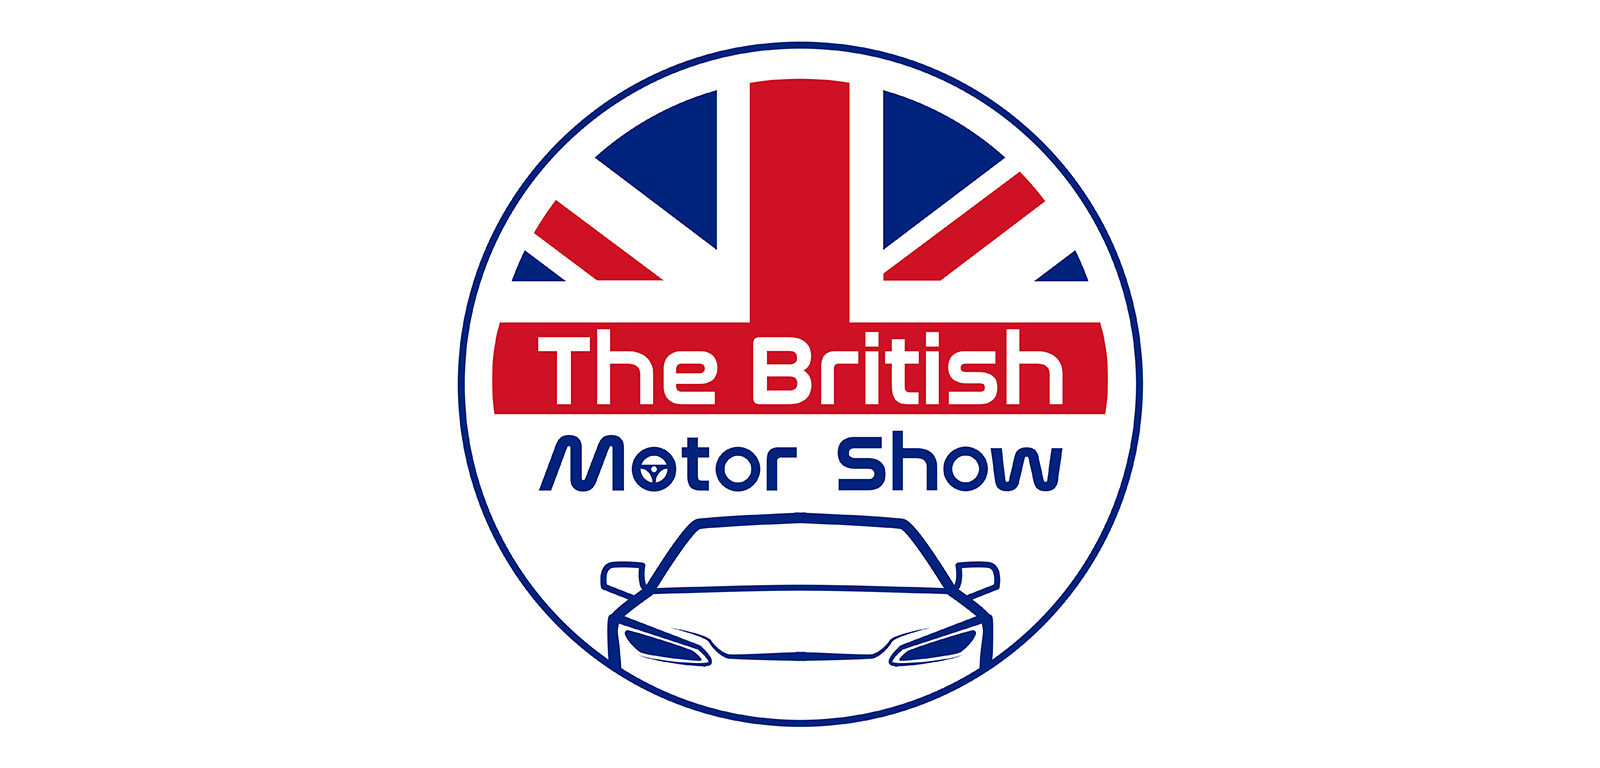 The British Motor Show 2020